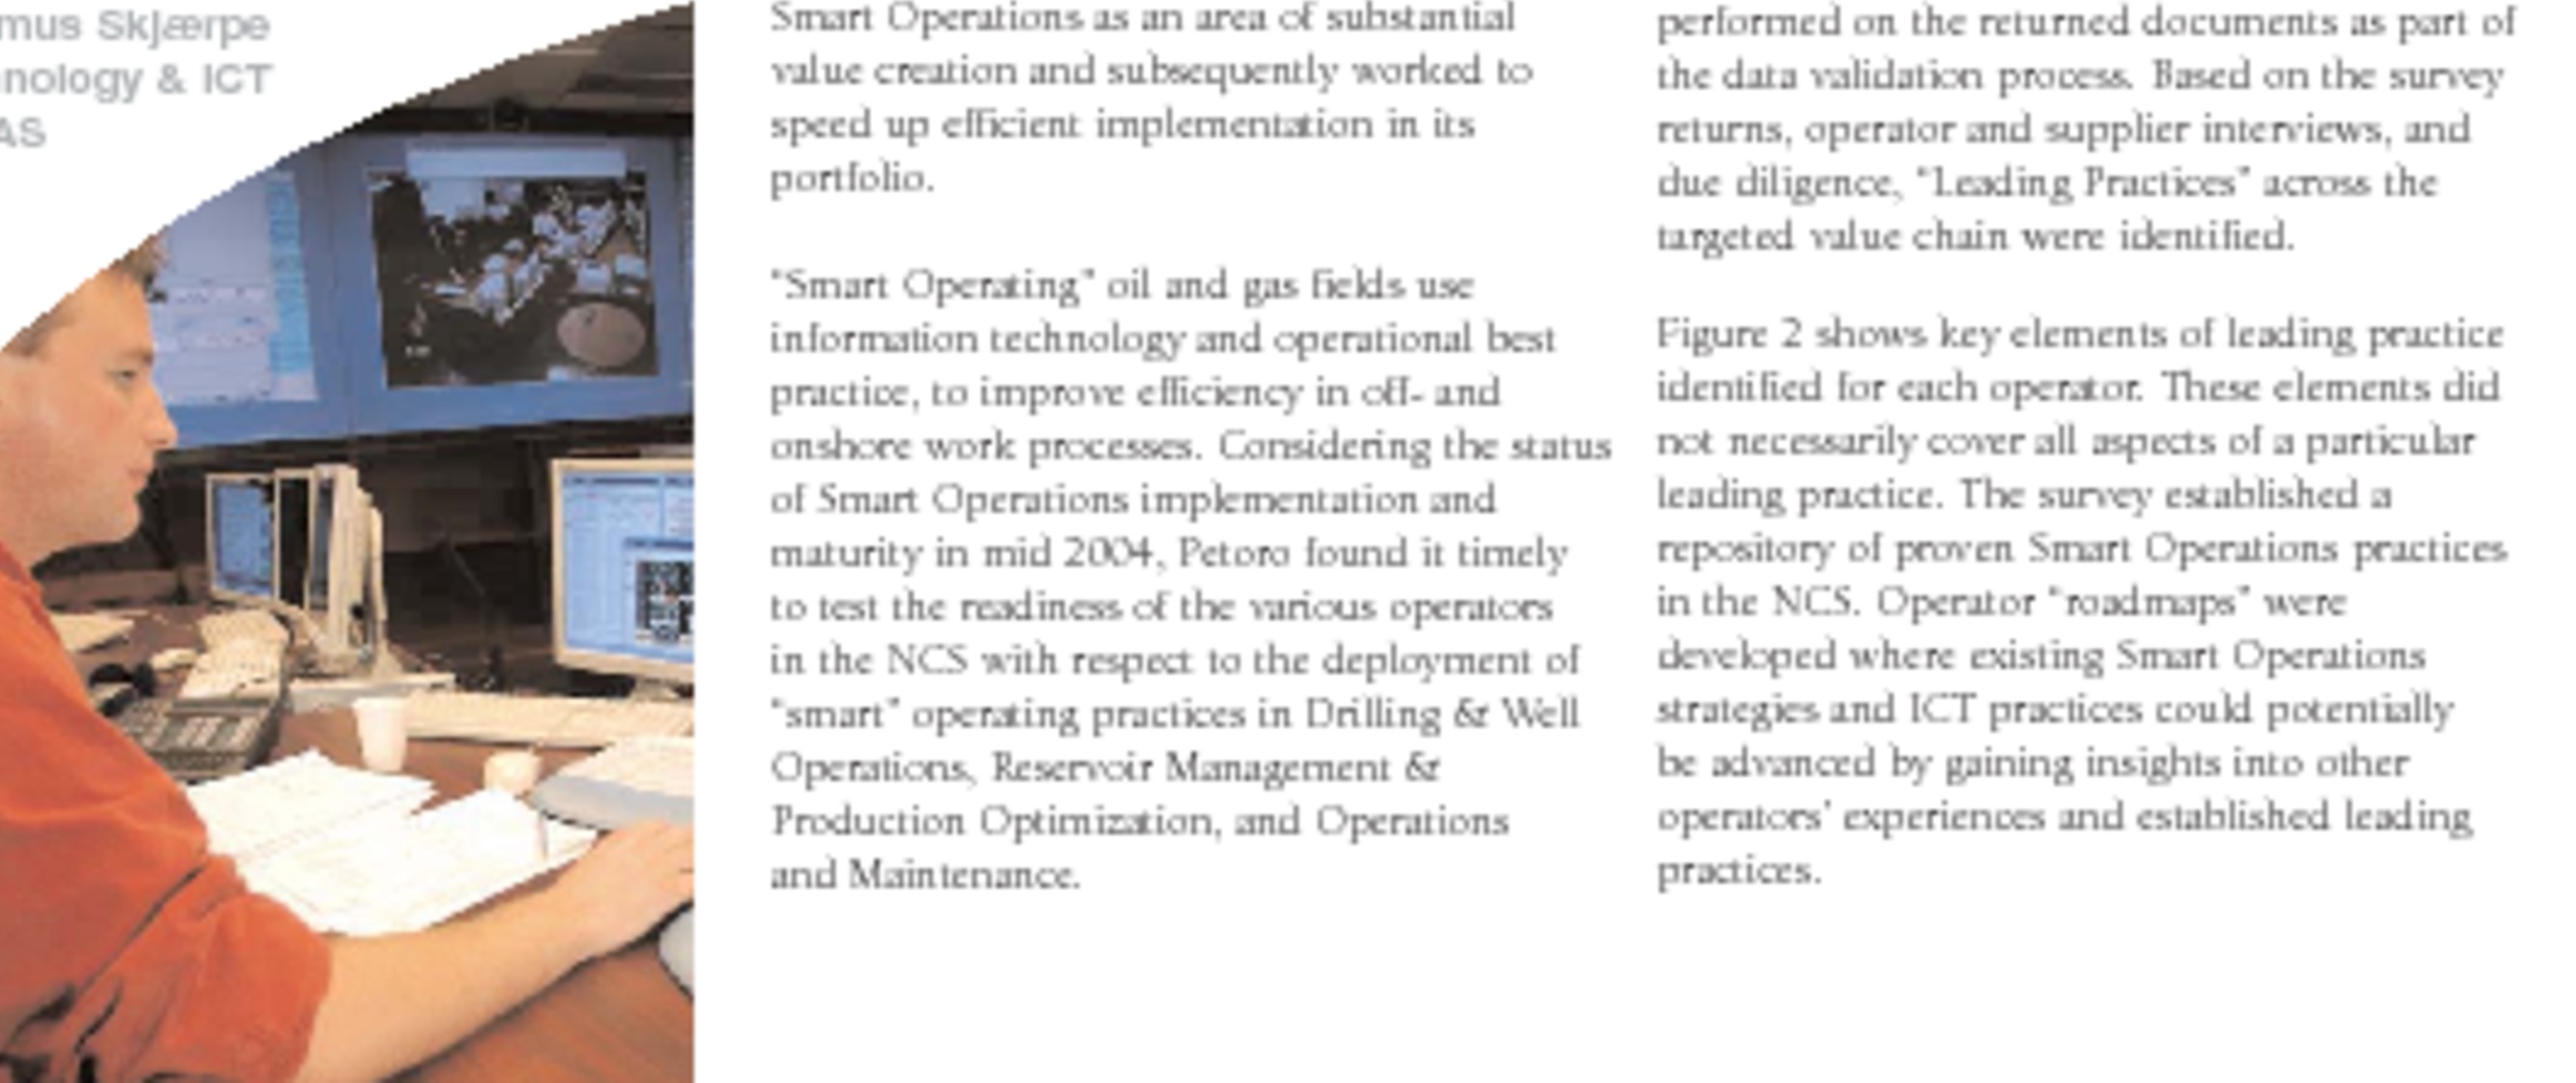 pdf_Petoro_AS-Smart_Operations_Readiness_Assessment